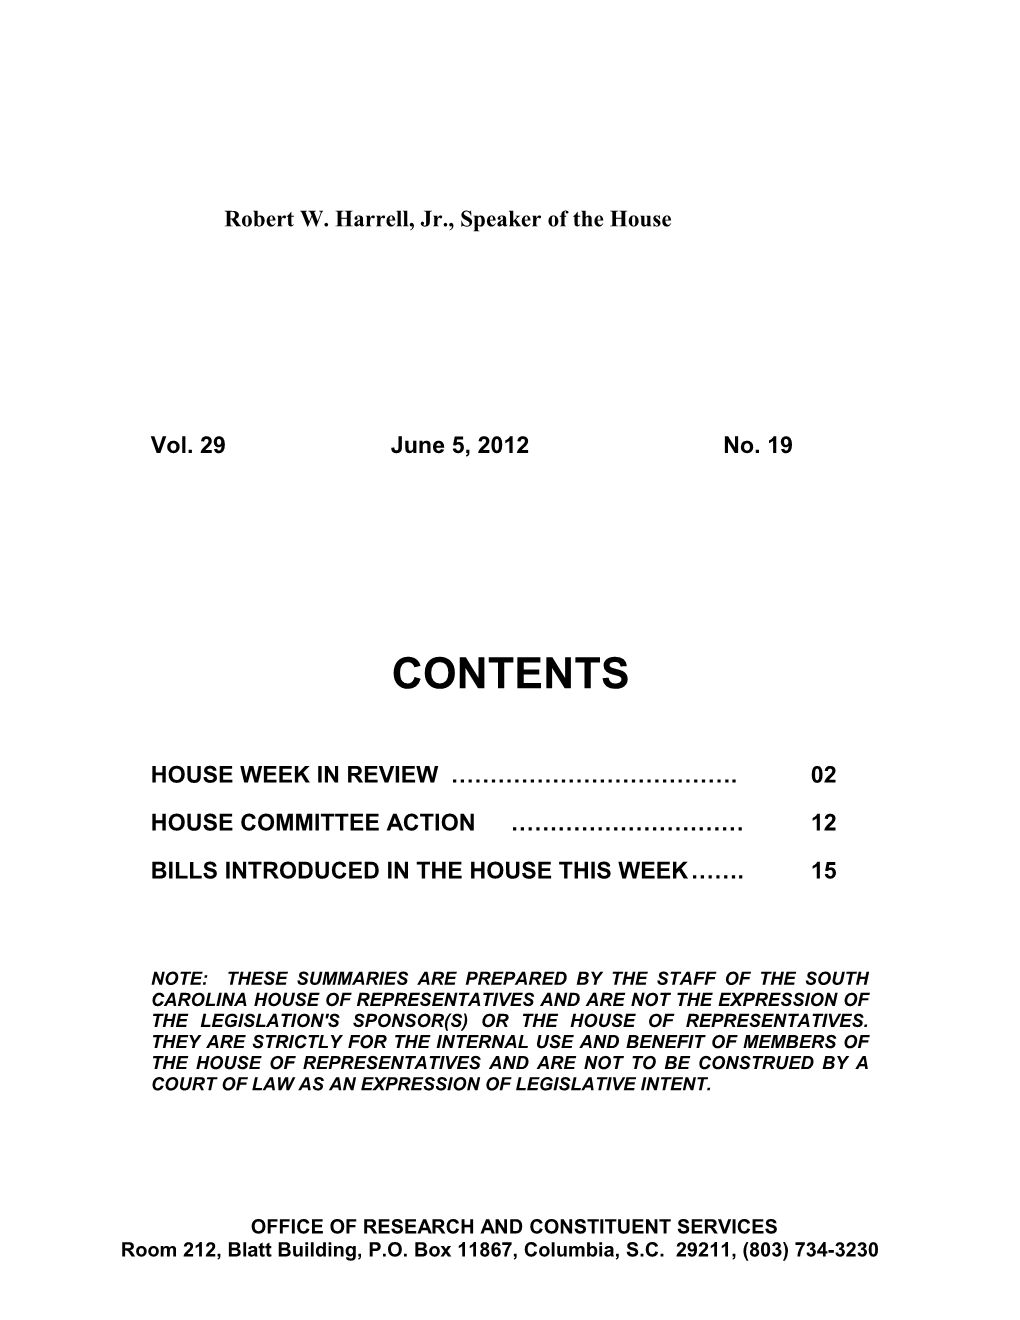 Legislative Update - Vol. 29 No. 19 June 5, 2012 - South Carolina Legislature Online